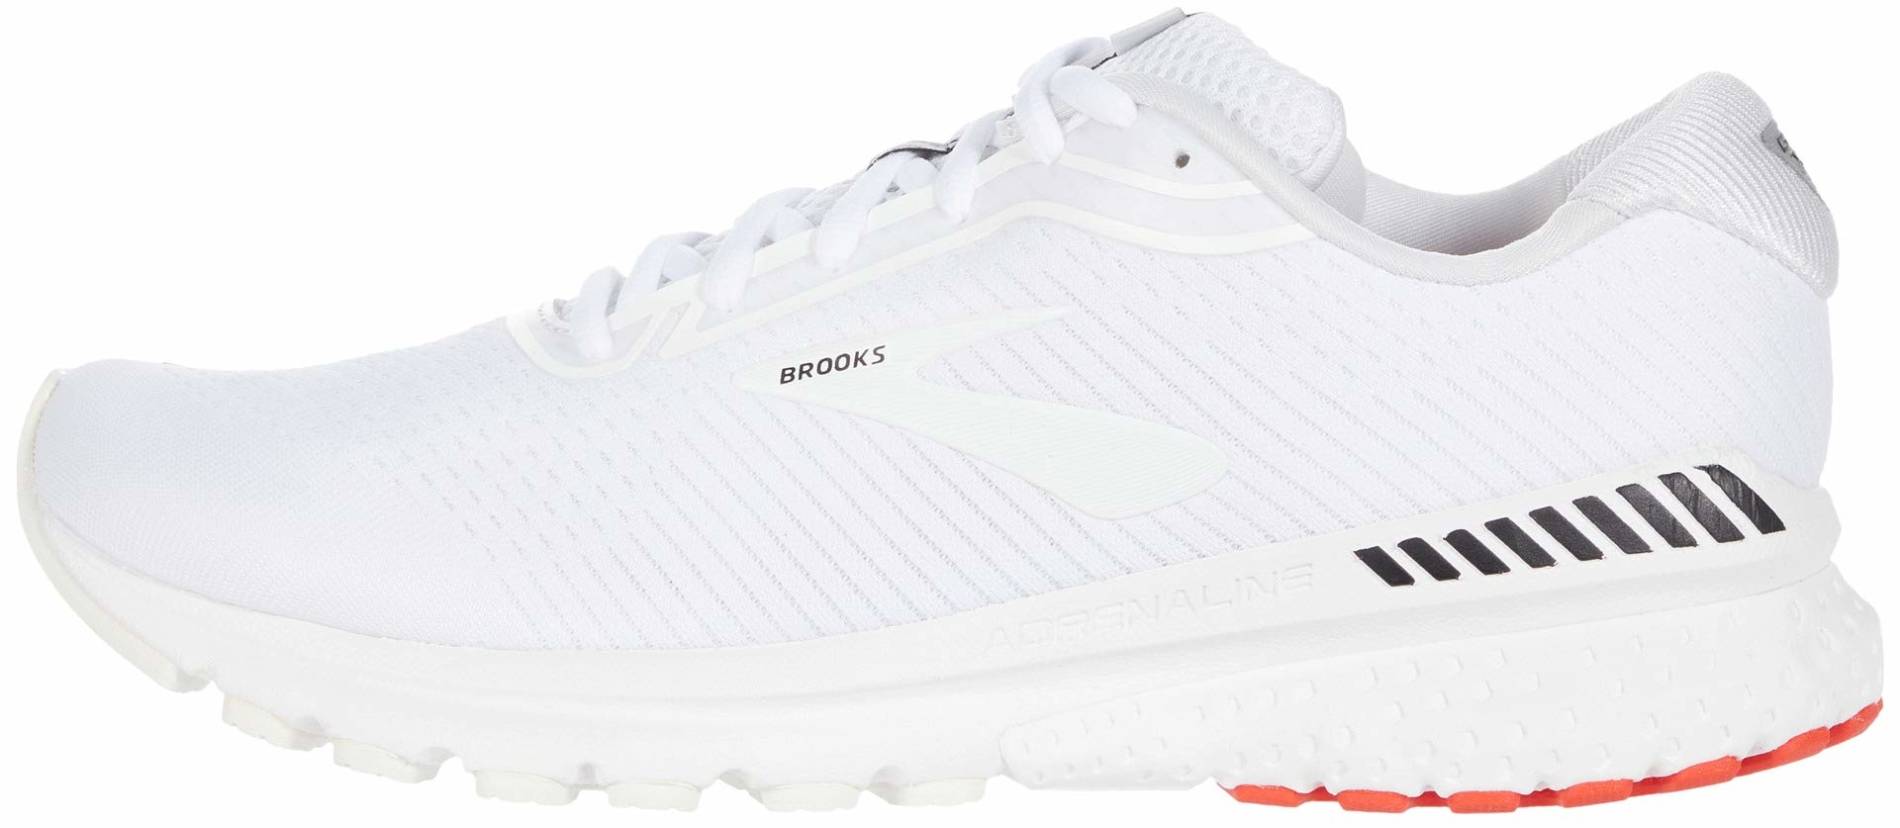 brooks running shoes models